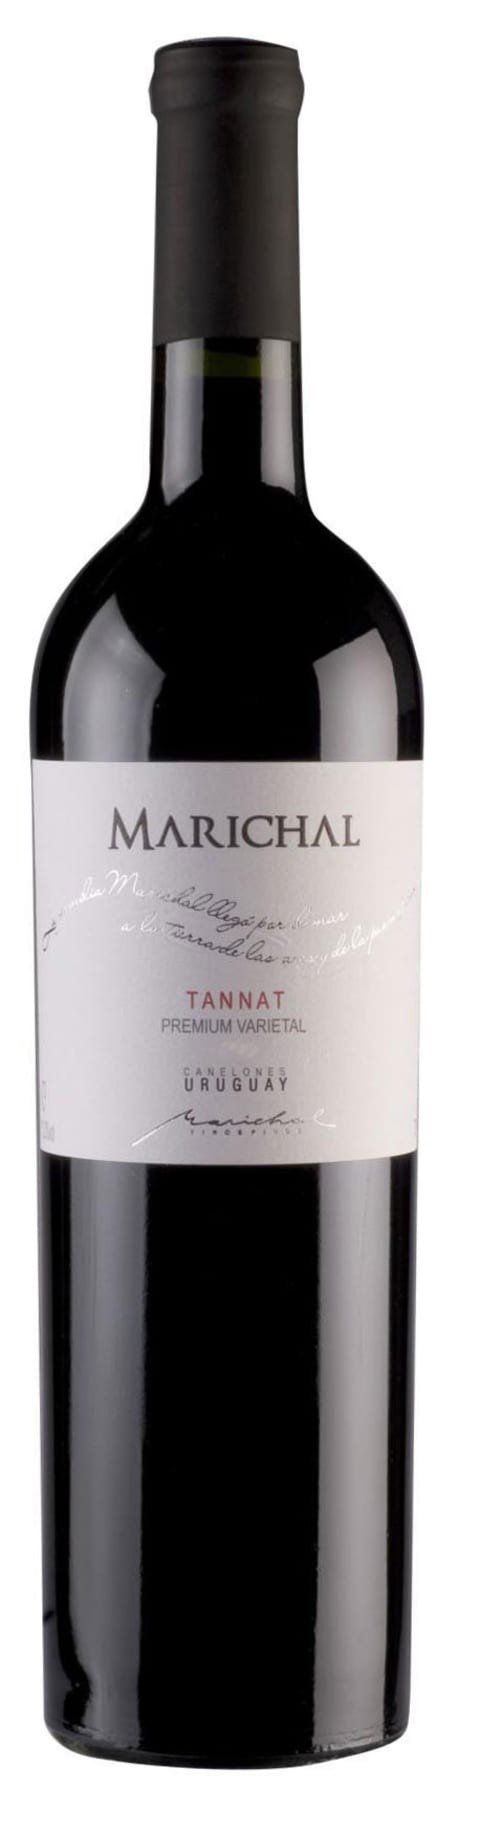 Marichal Uruguay Tannat 2019 红葡萄酒